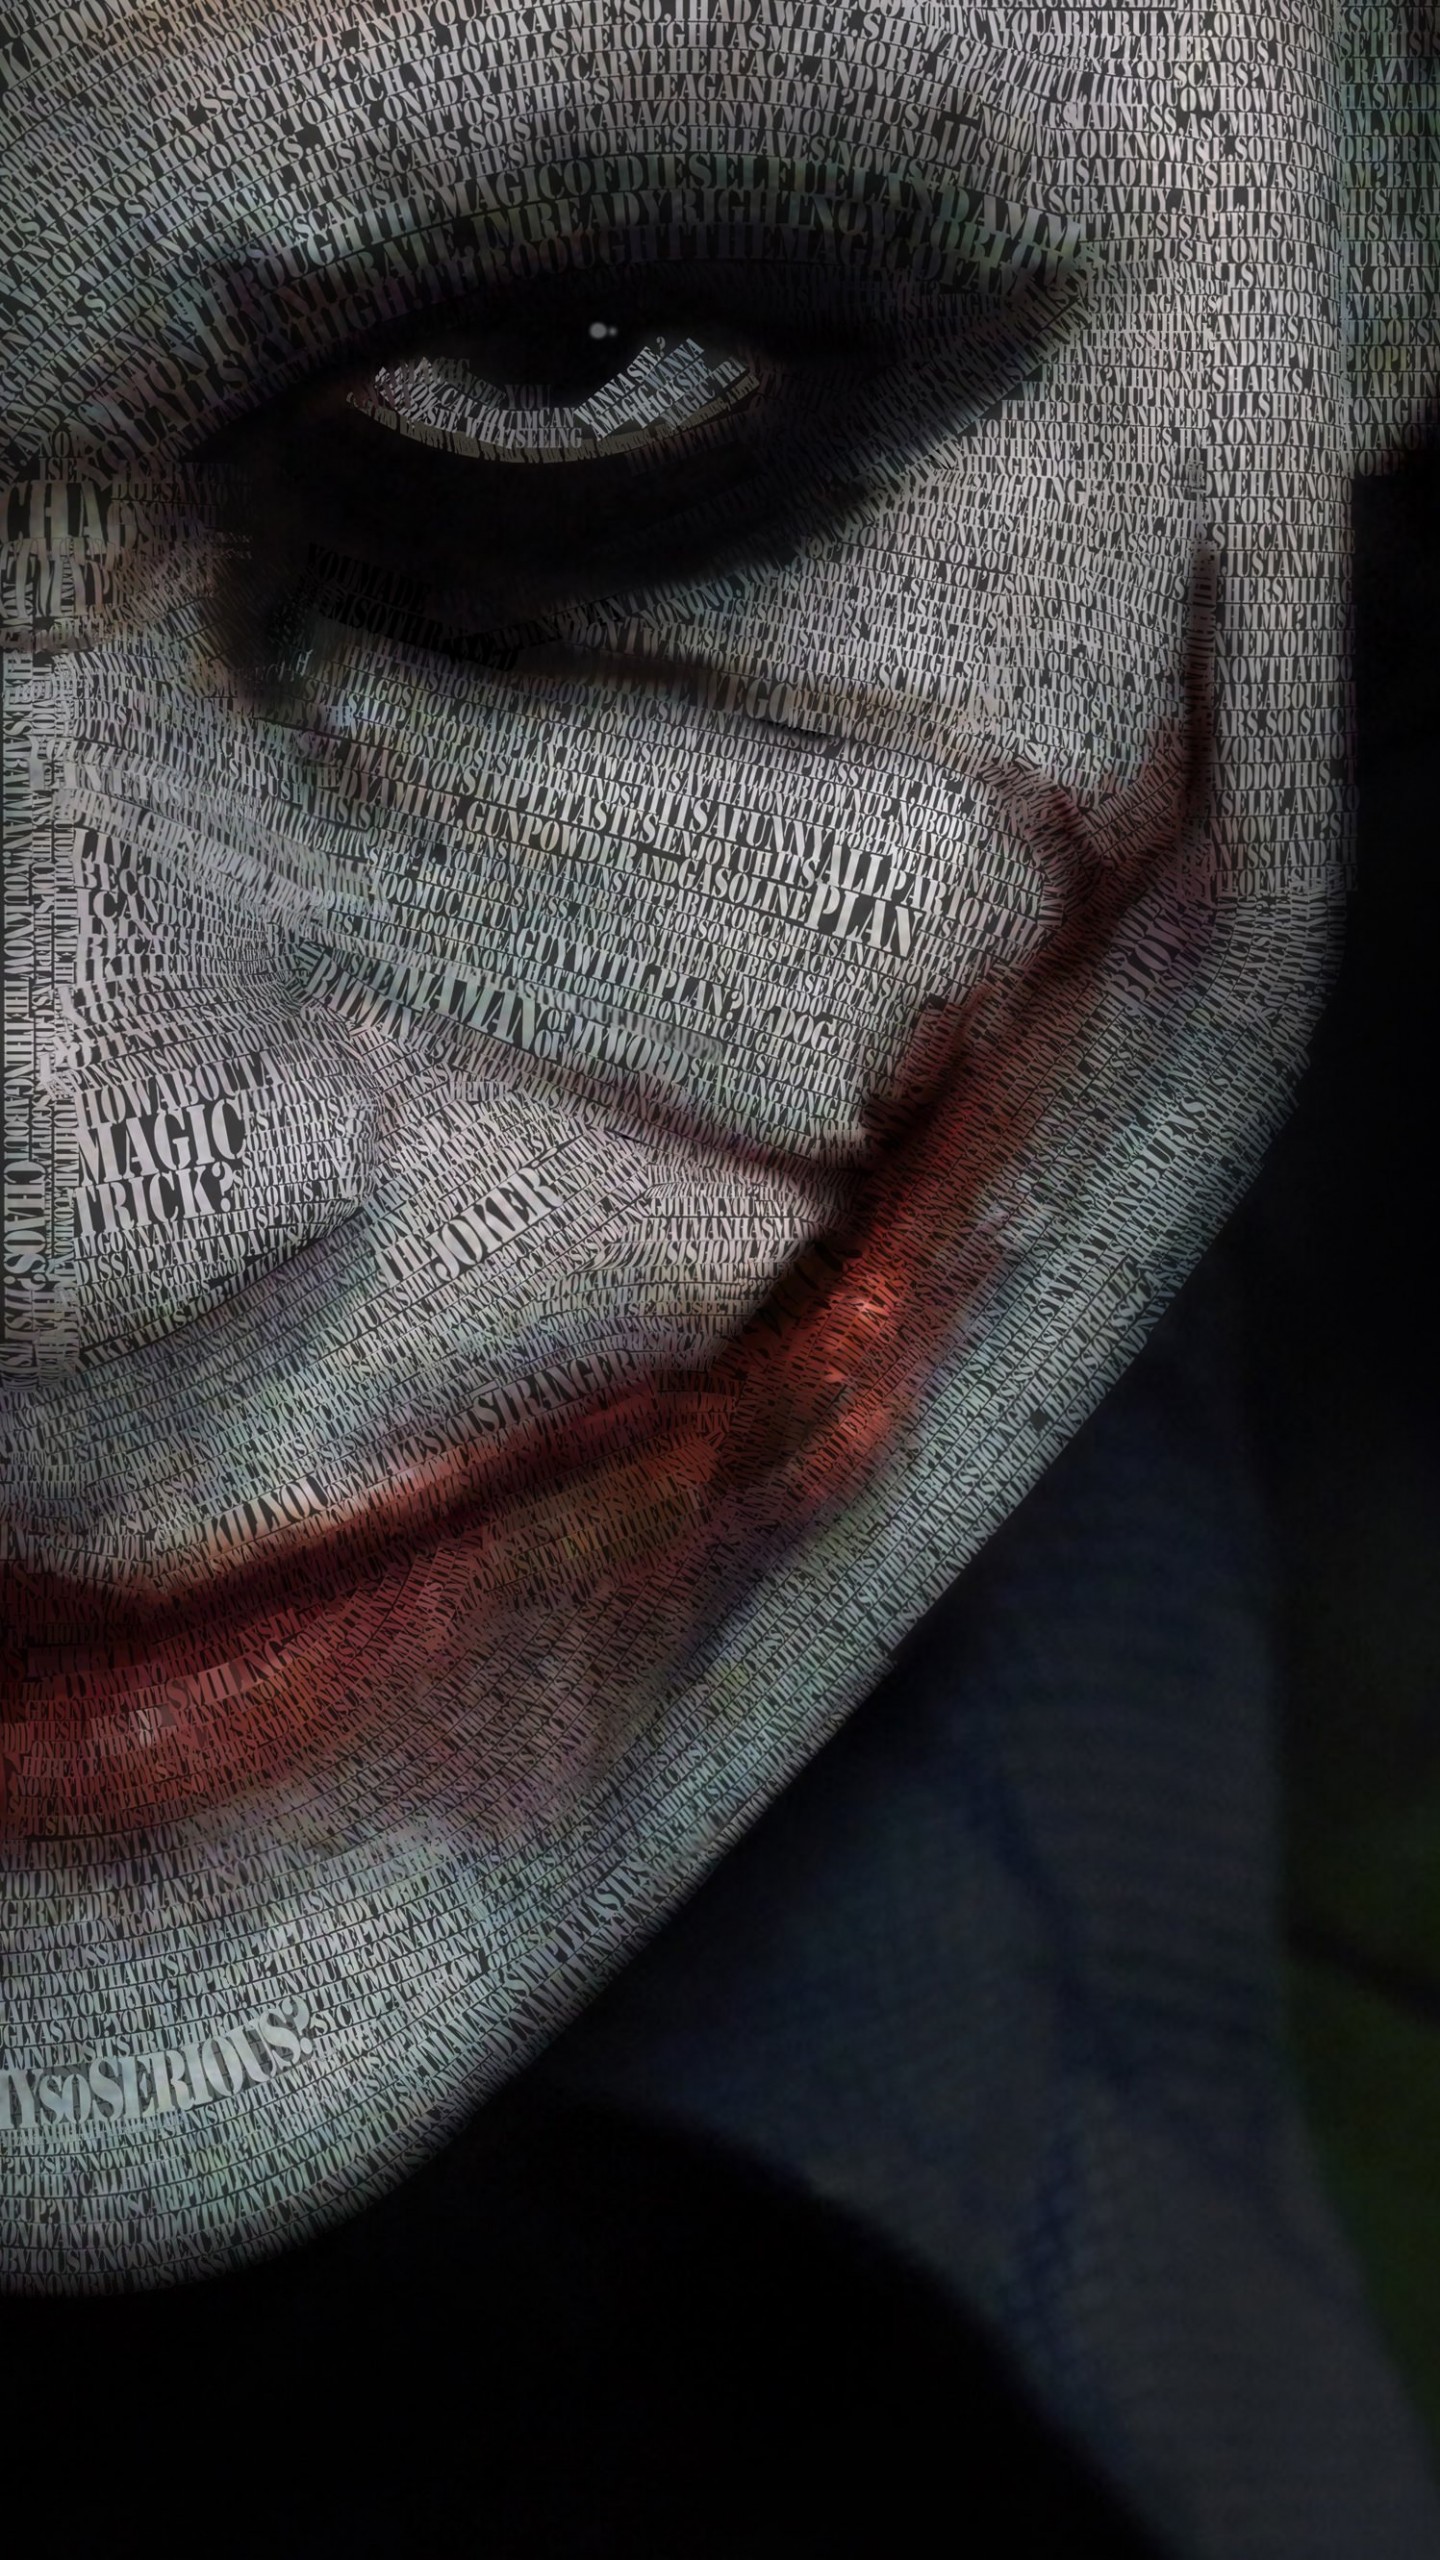 The Joker Typeface Portrait Wallpaper for Google Nexus 6